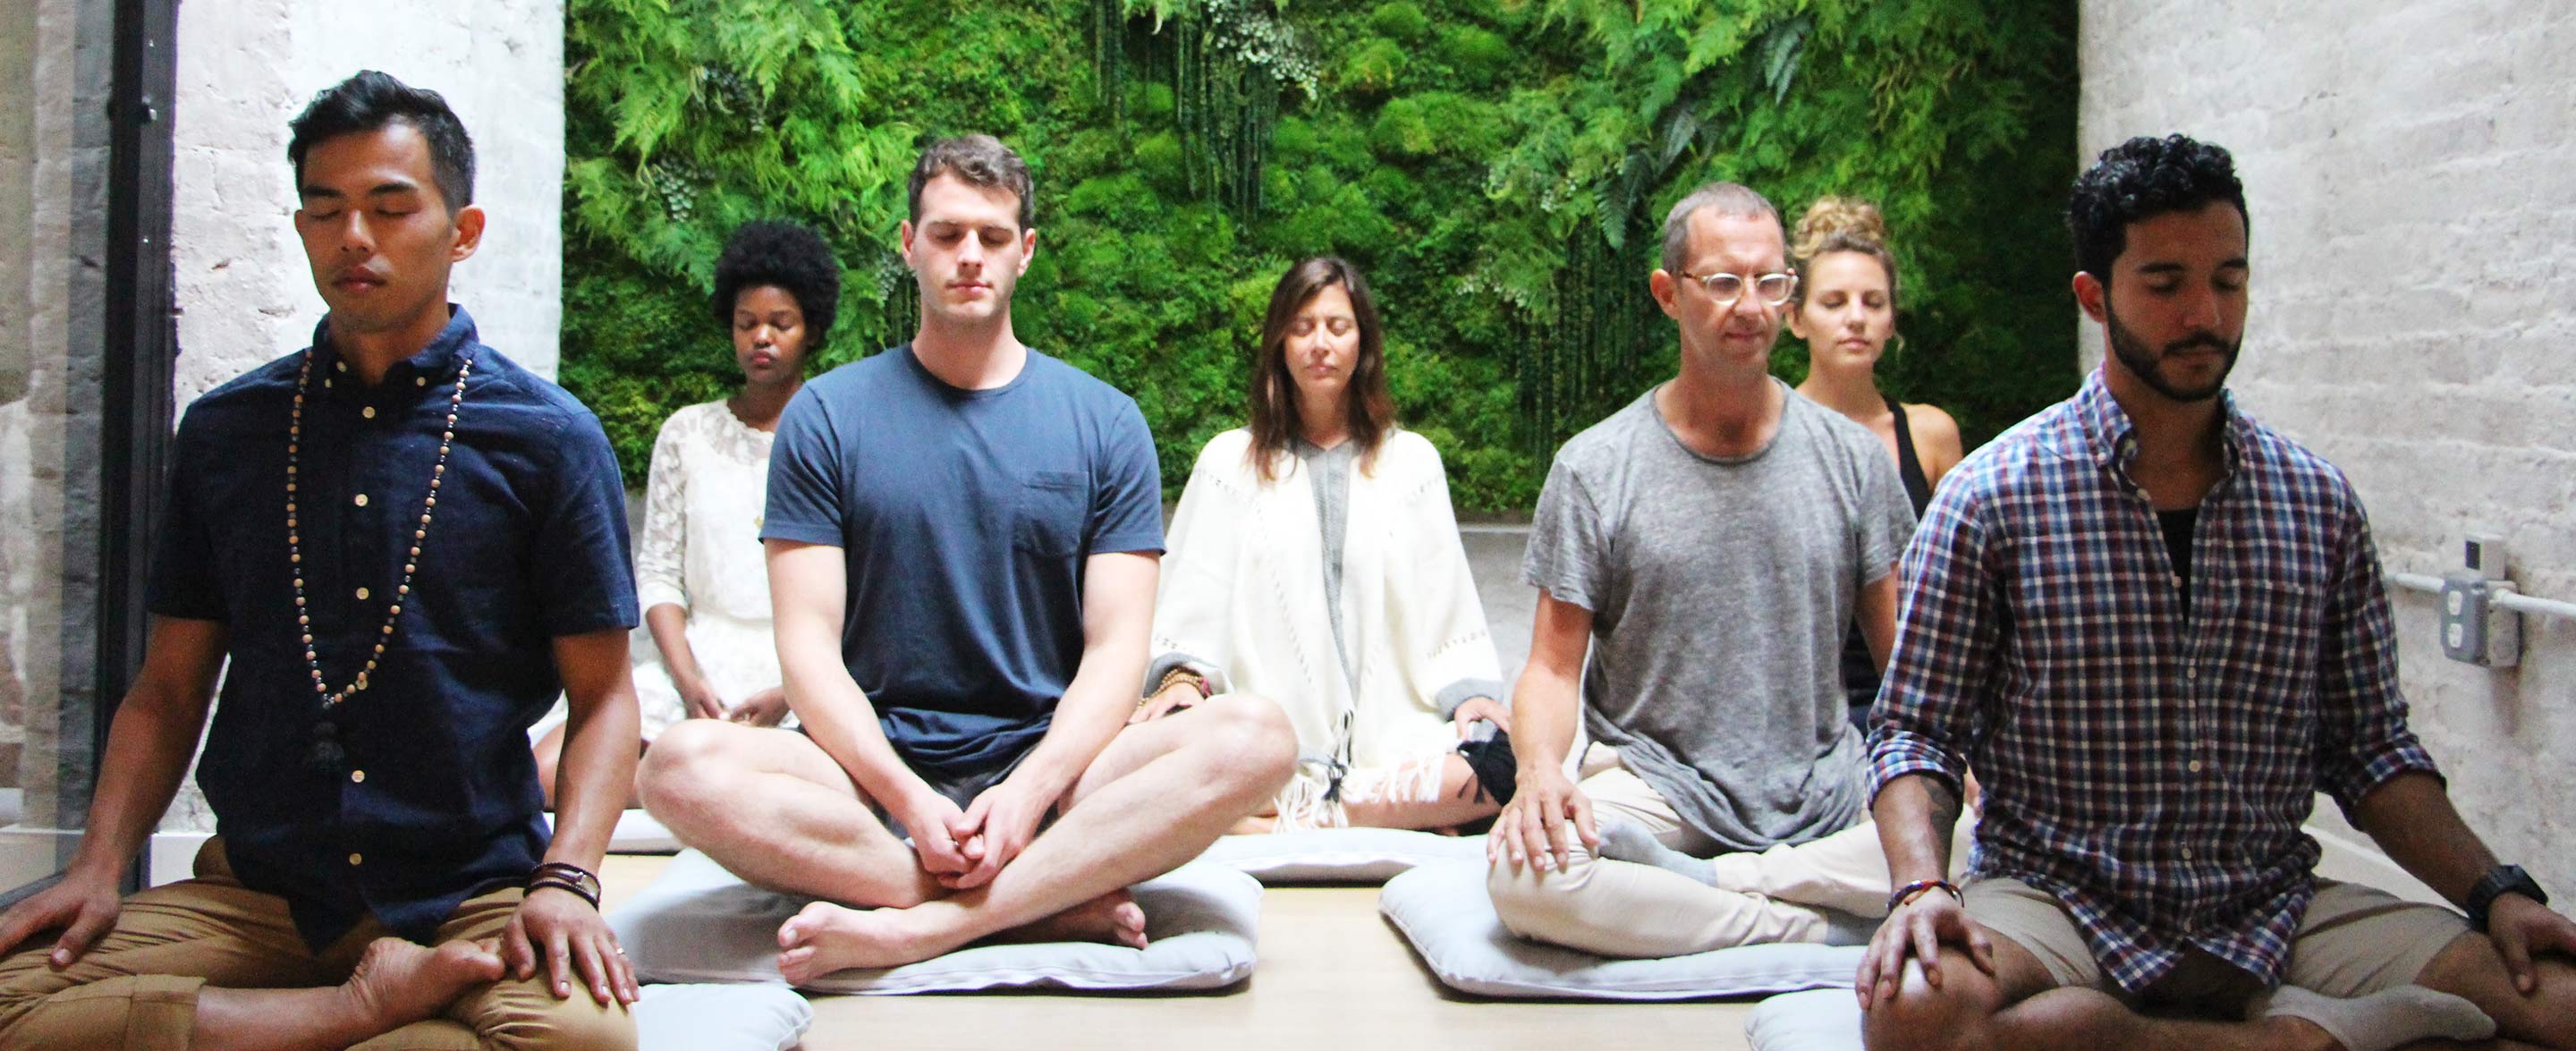 Group yoga meditation